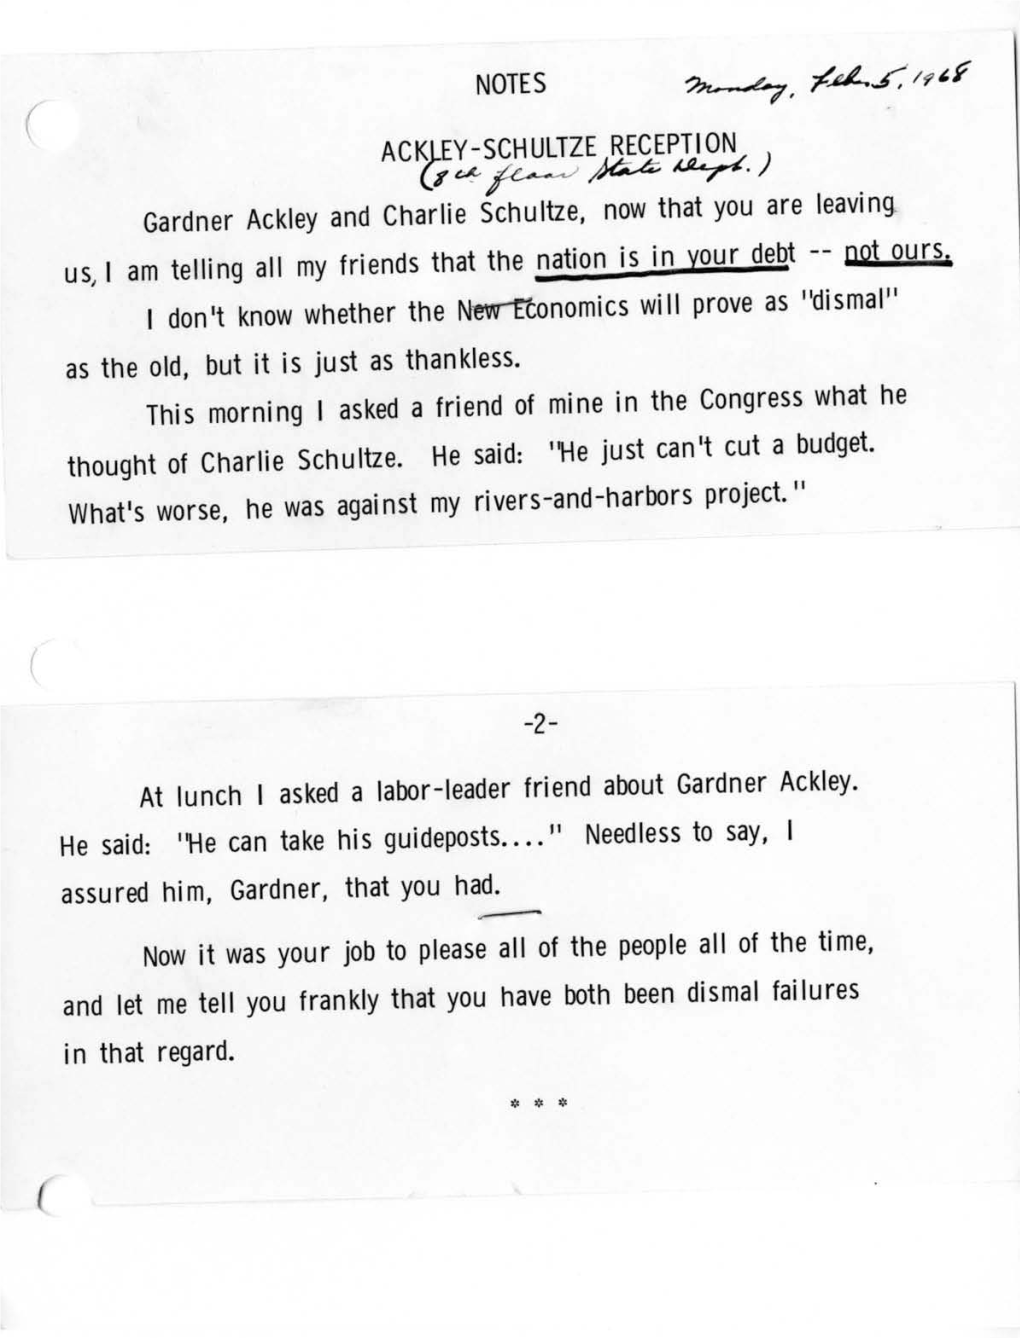 Ackley-Schultze Reception, Washington, D.C., February 5, 1968